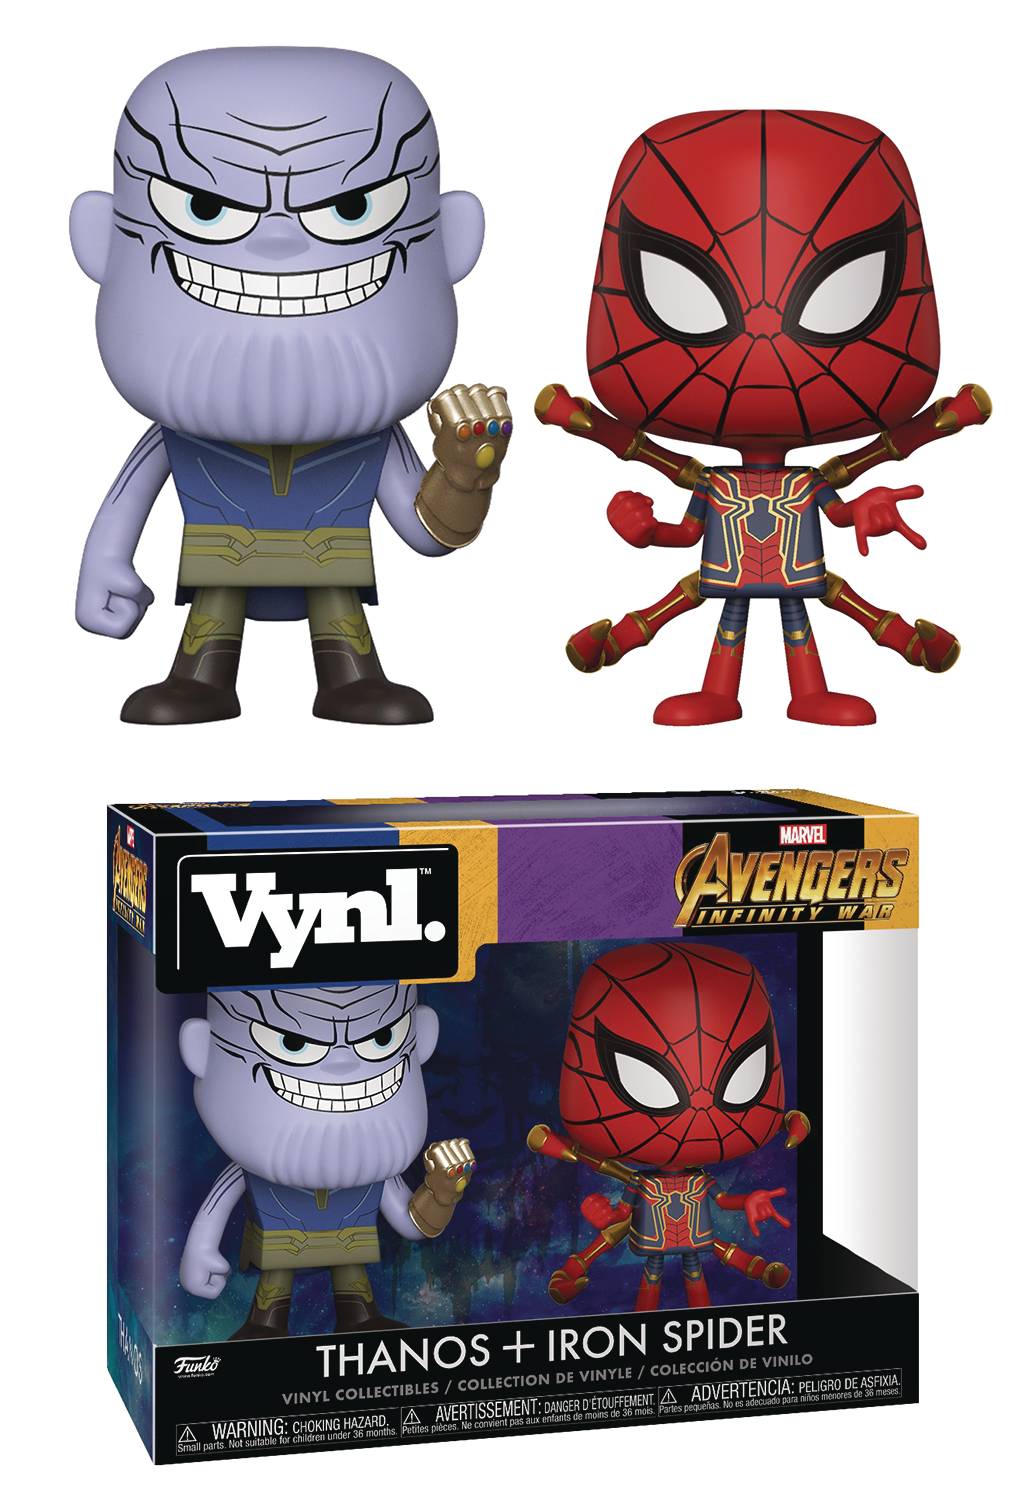 Vynl Avengers Infinity War Thanos & Iron Spider Vinyl Figure 2pk